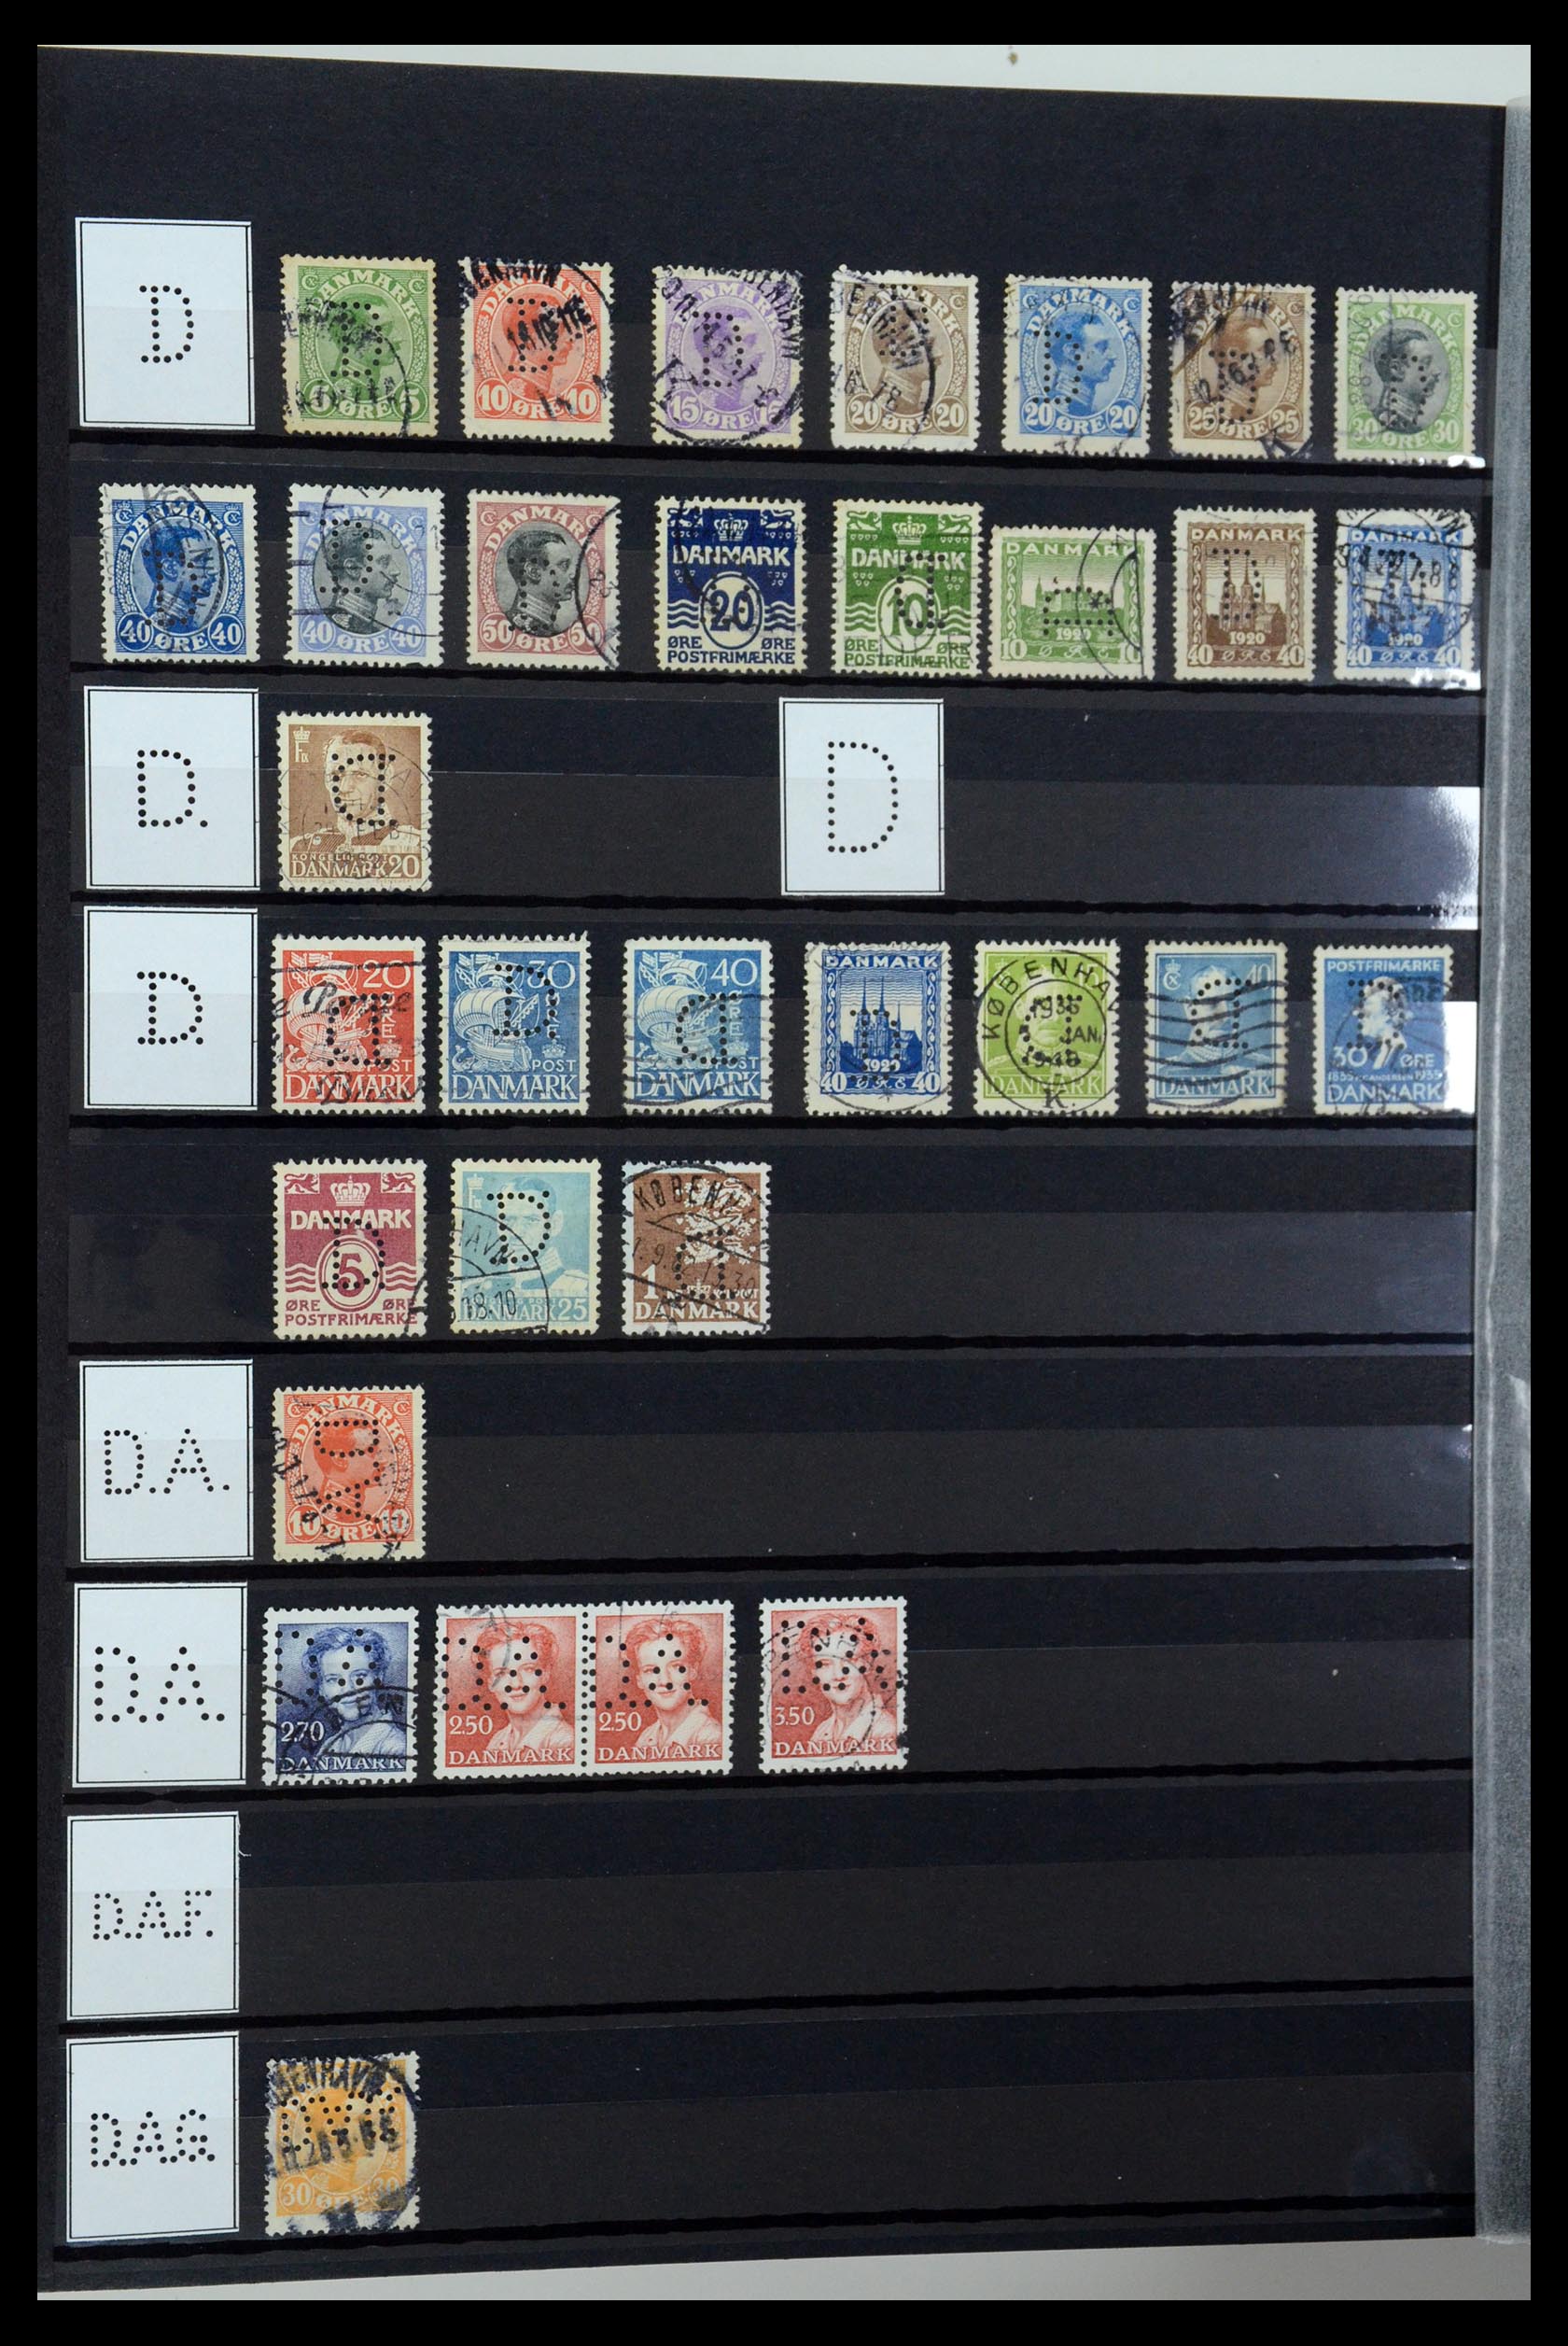 36396 032 - Stamp collection 36396 Denmark perfins.